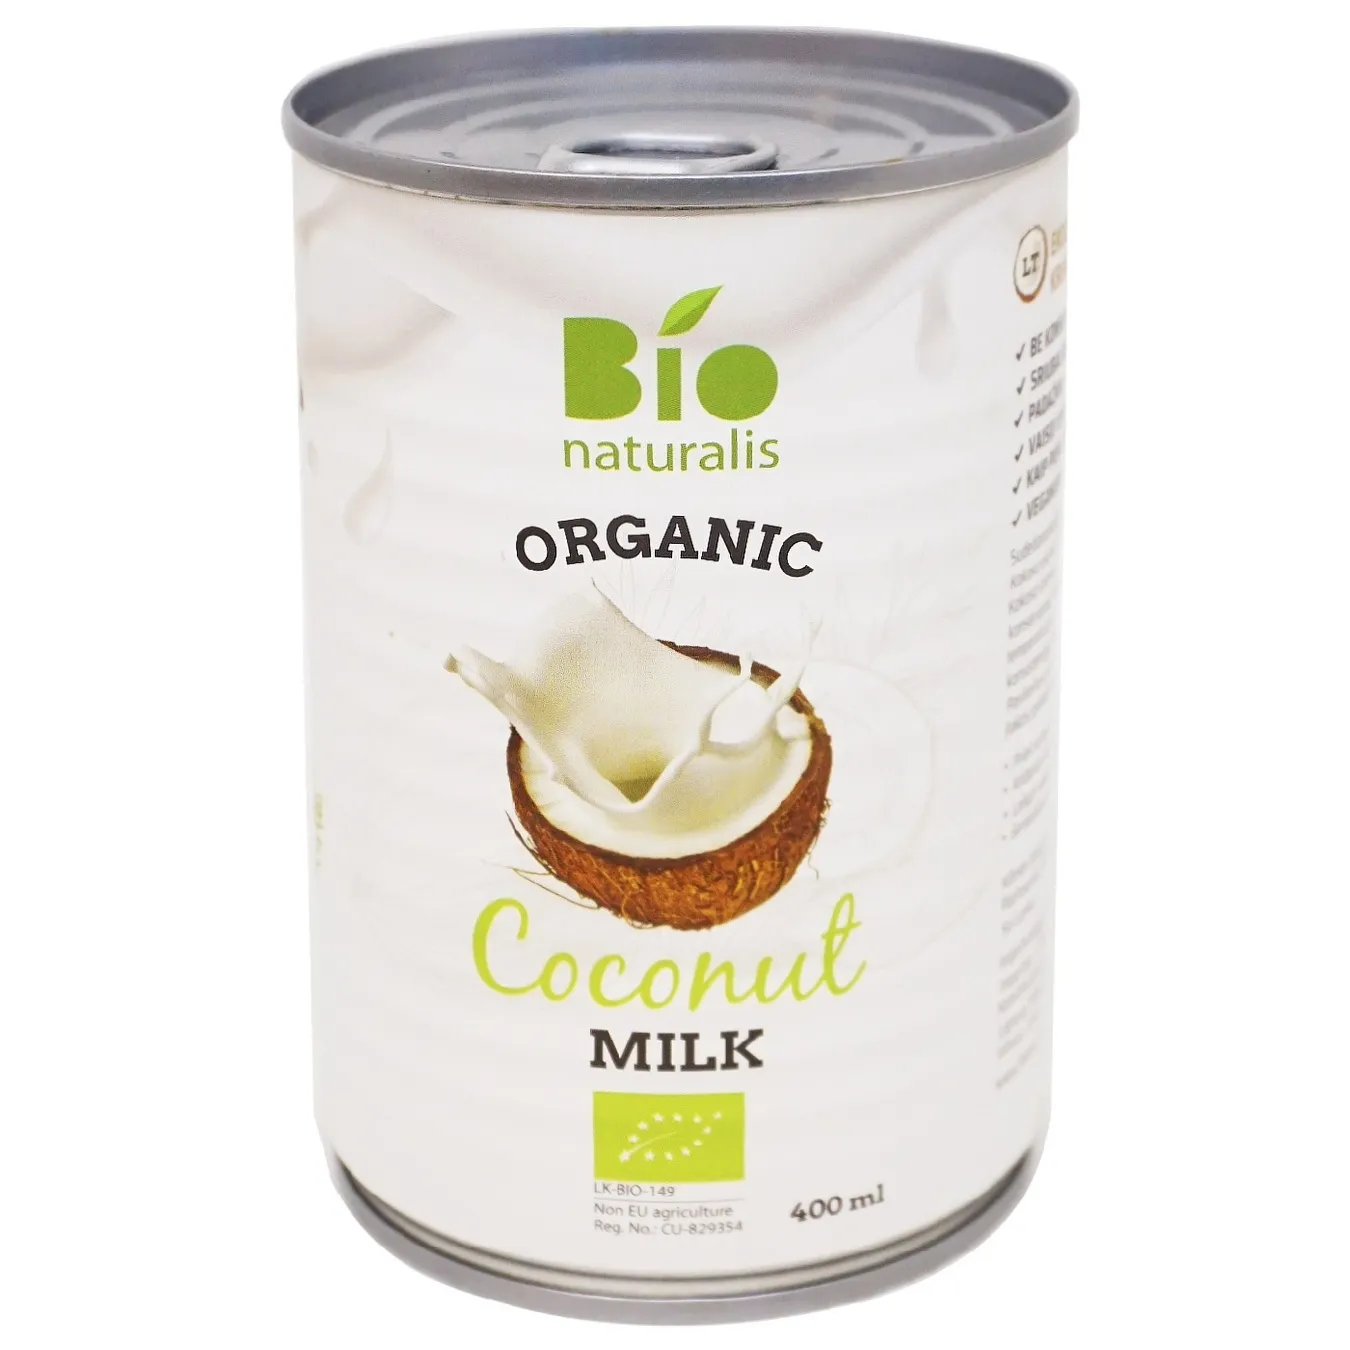 Bionaturalis Organic Coconut Milk 400ml